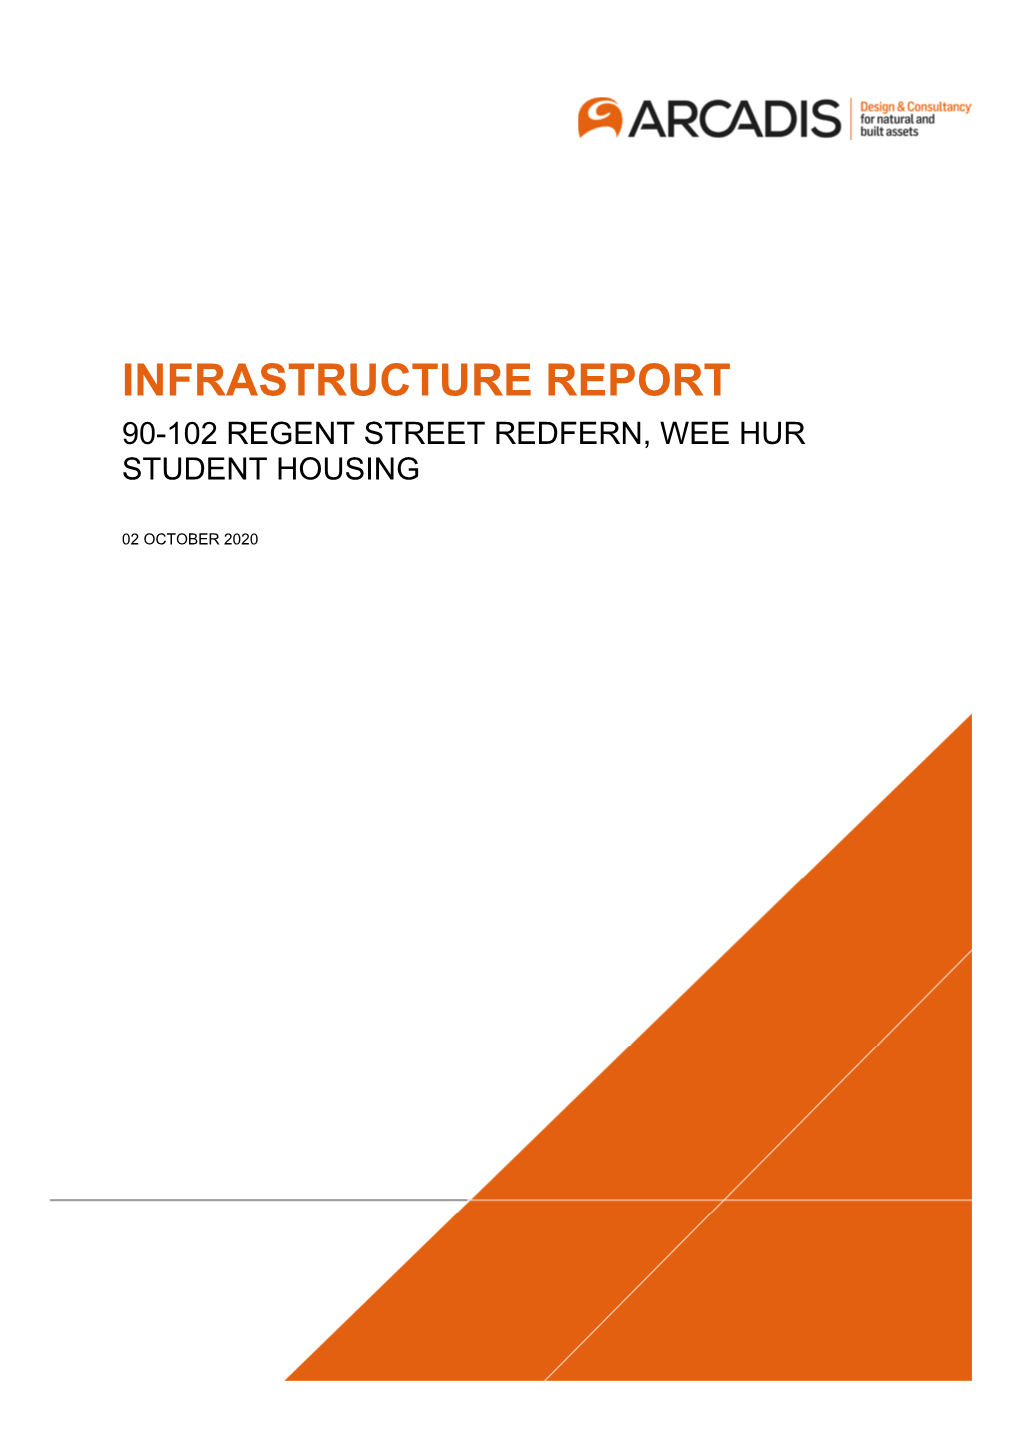 Infrastructure Report 90-102 Regent Street Redfern, Wee Hur Student Housing